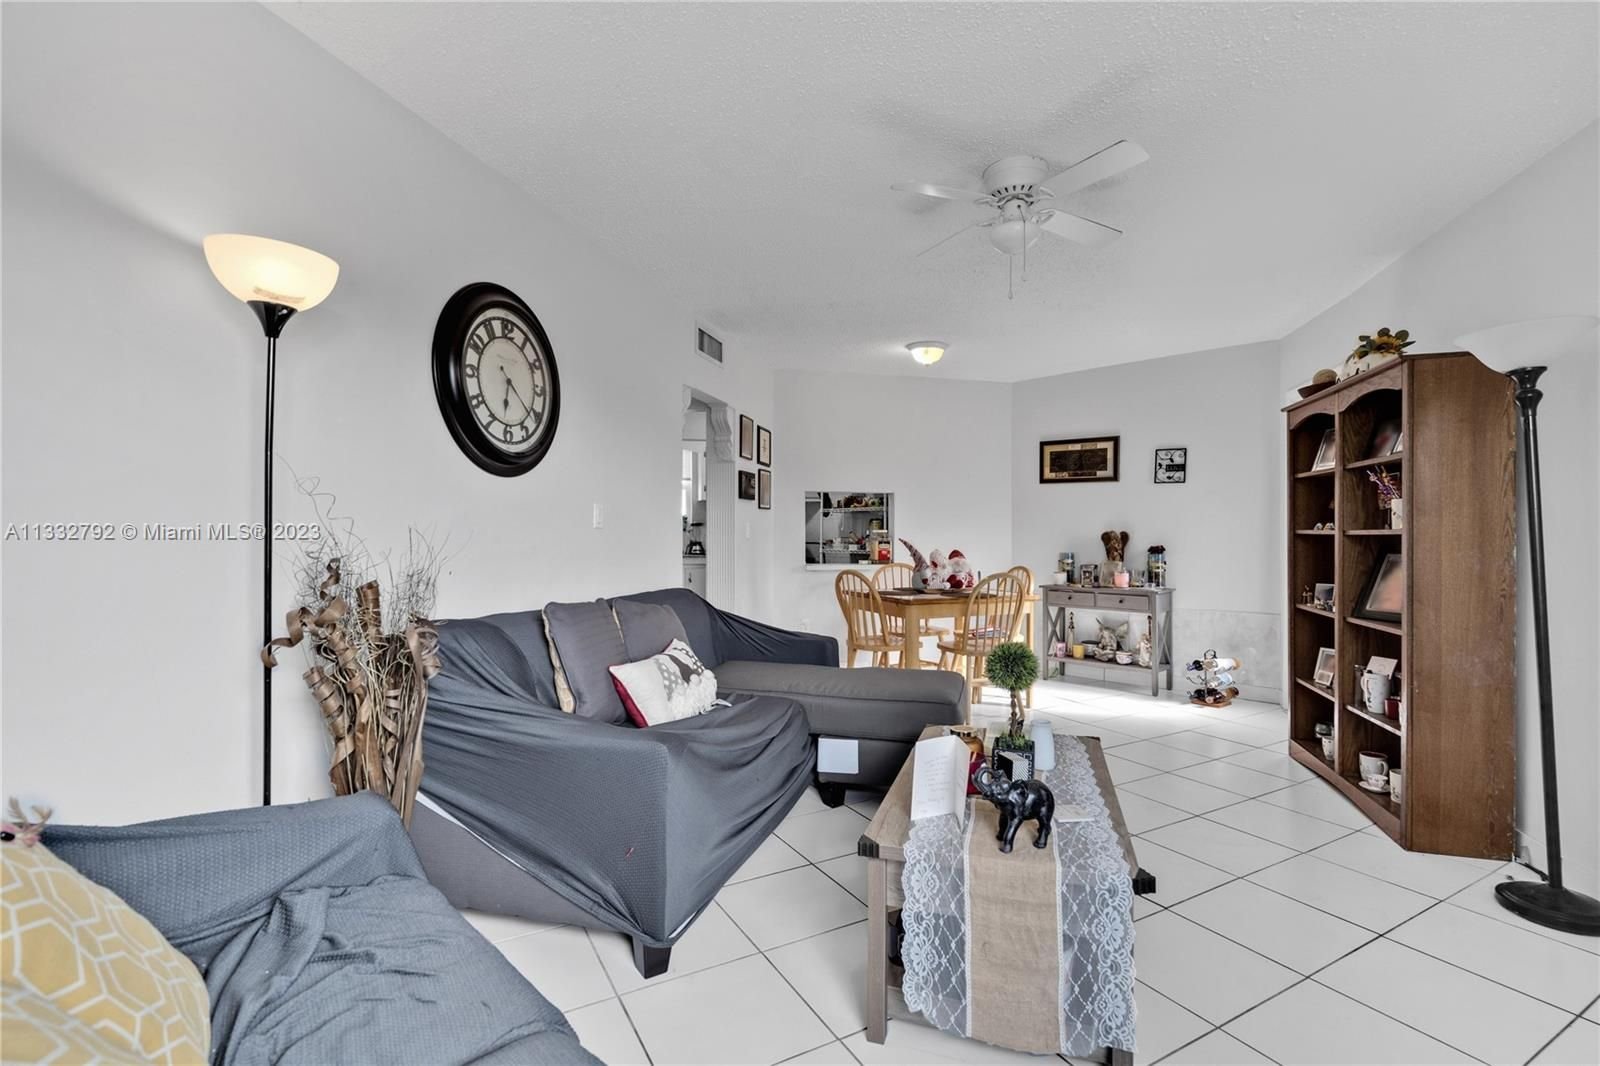 Real estate property located at 18608 18th Ave #254, Miami-Dade County, Miami, FL